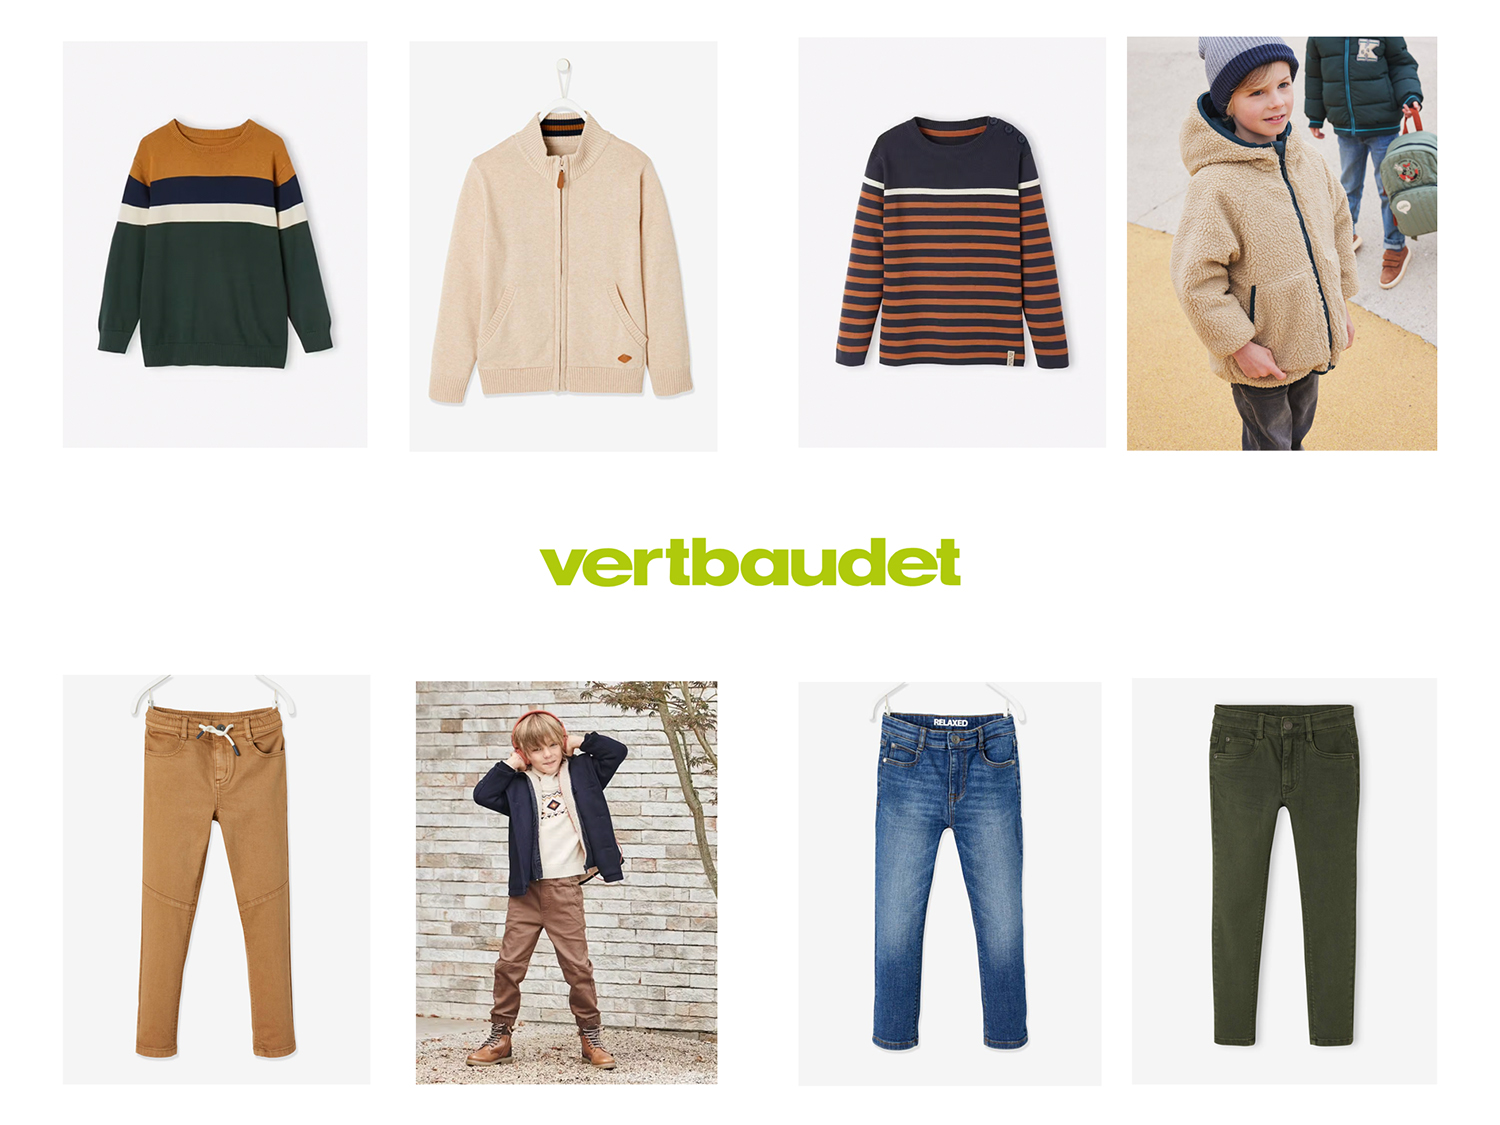 vertbaudet boys - what to wear to an autumn photoshoot 